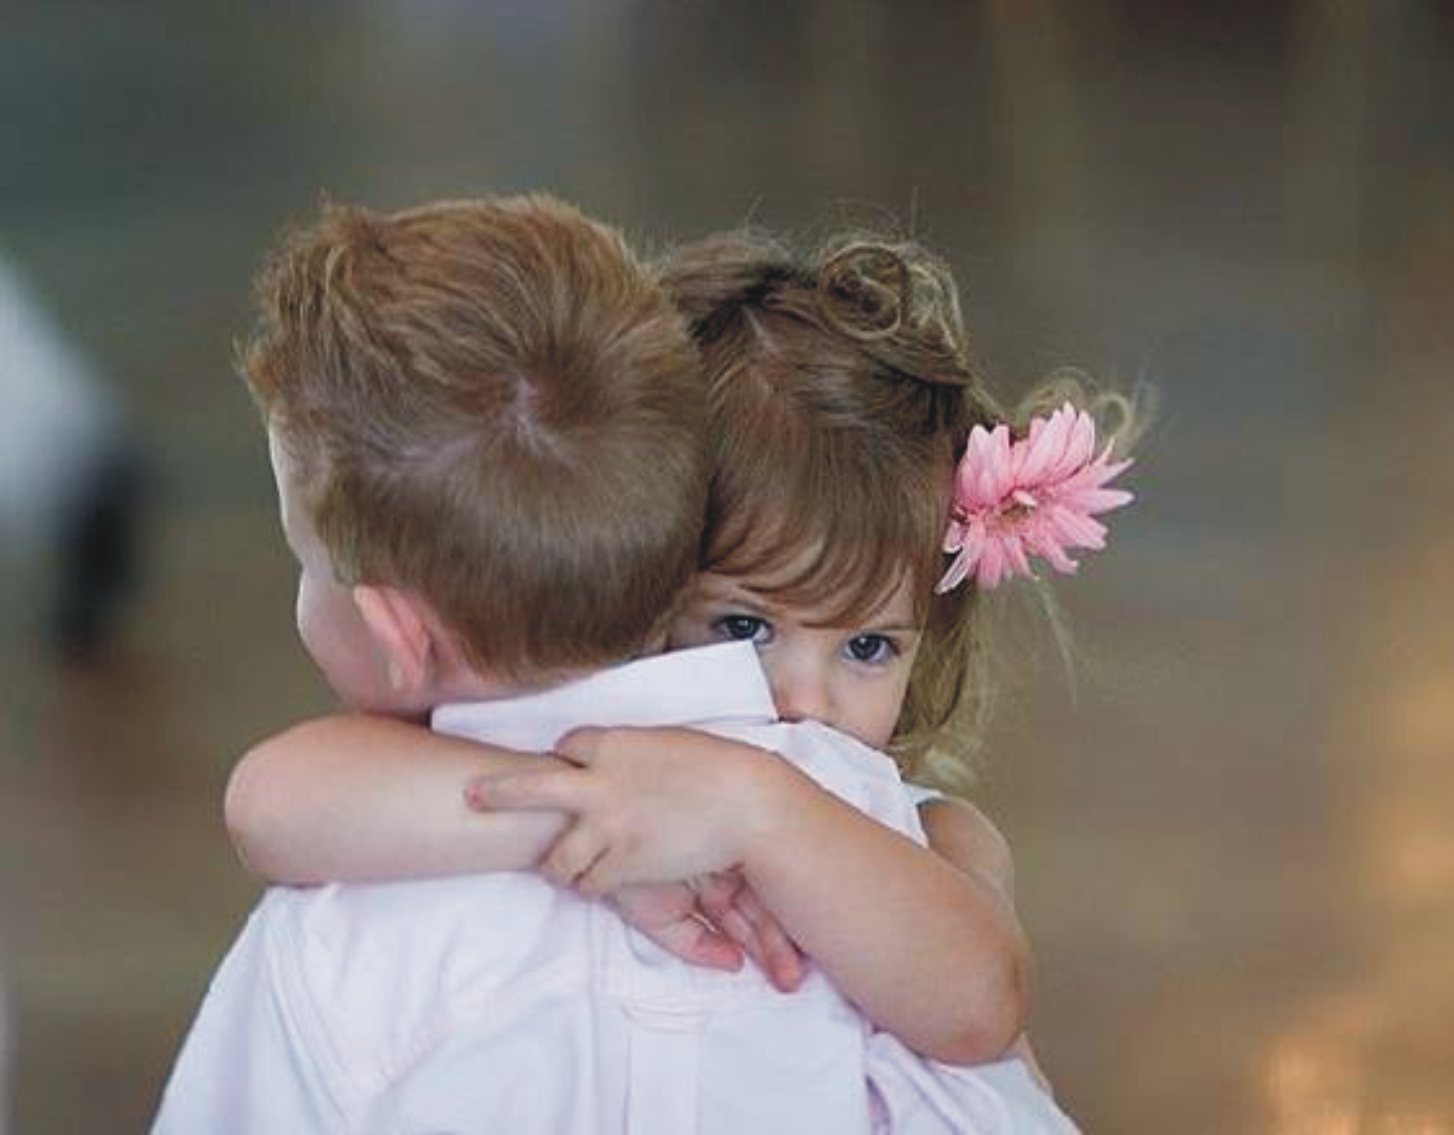 Happy Hug Day Hd Images - Happy Hug Day Children - HD Wallpaper 